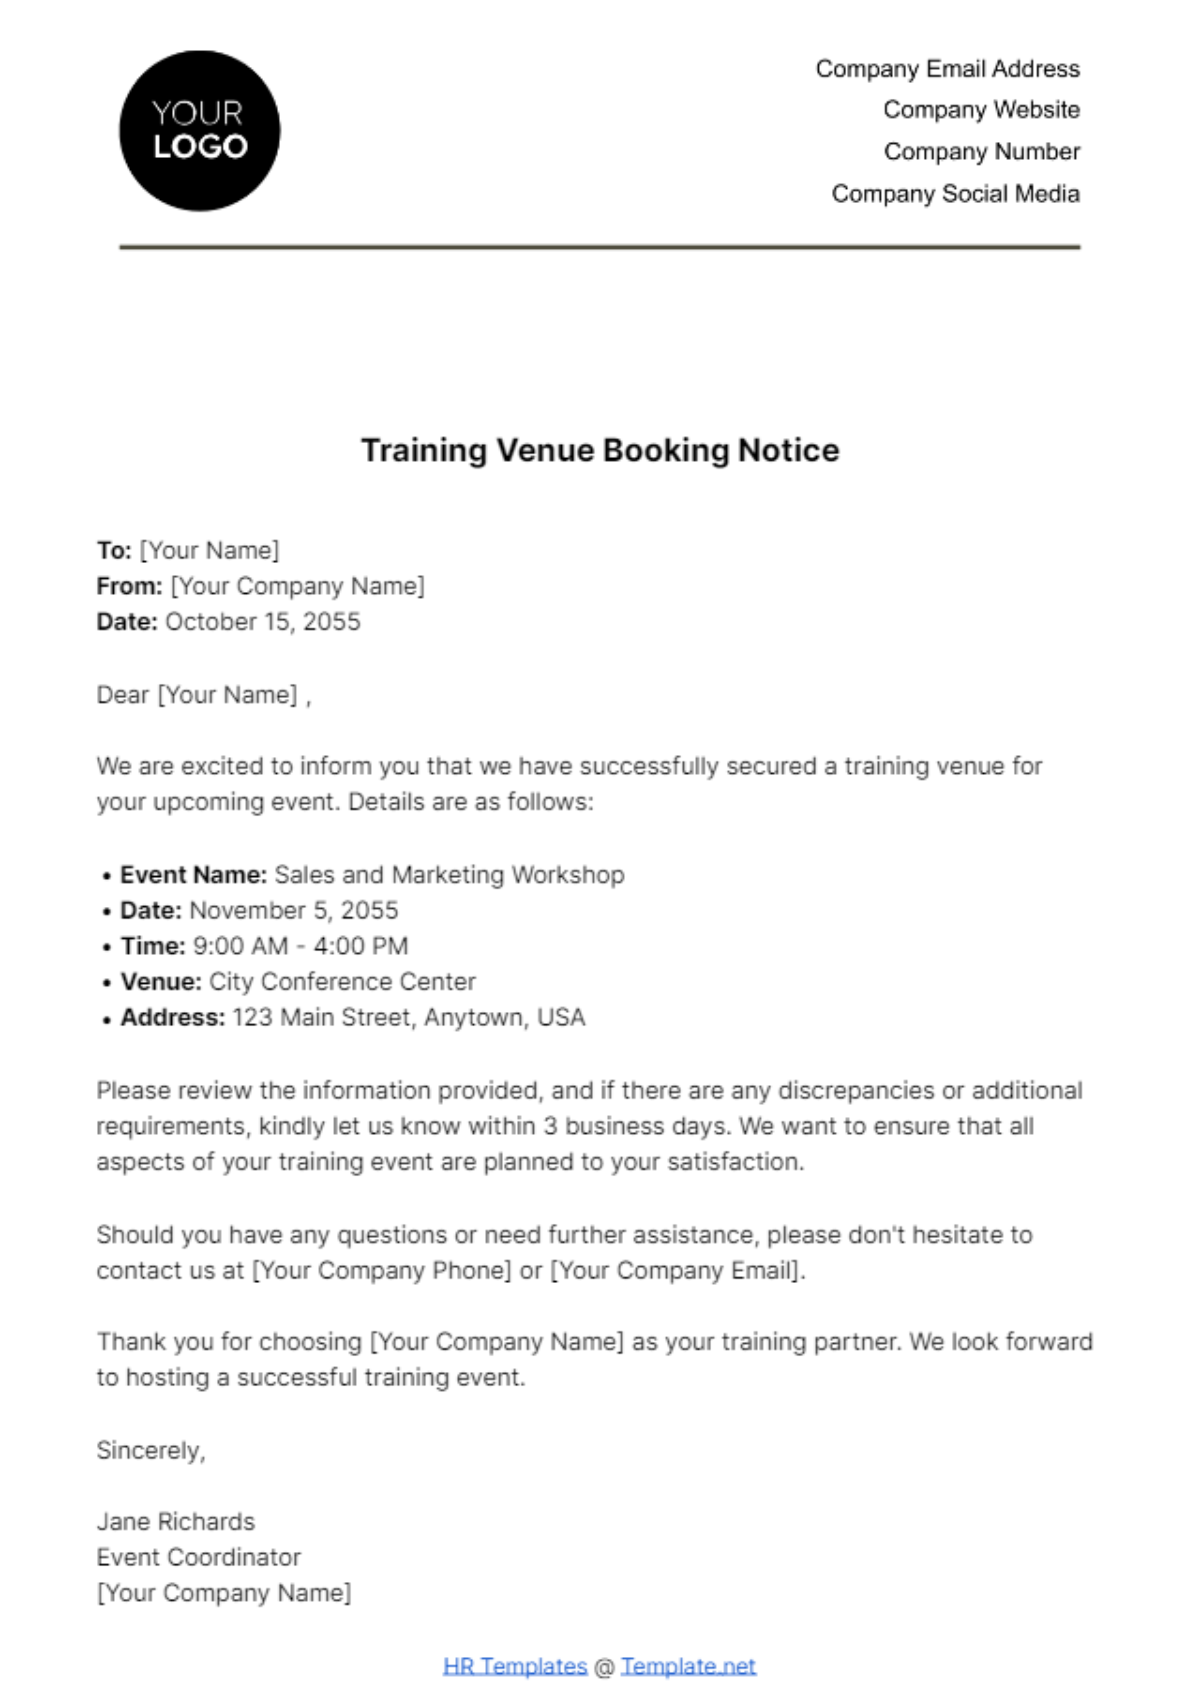 Training Venue Booking Notice HR Template